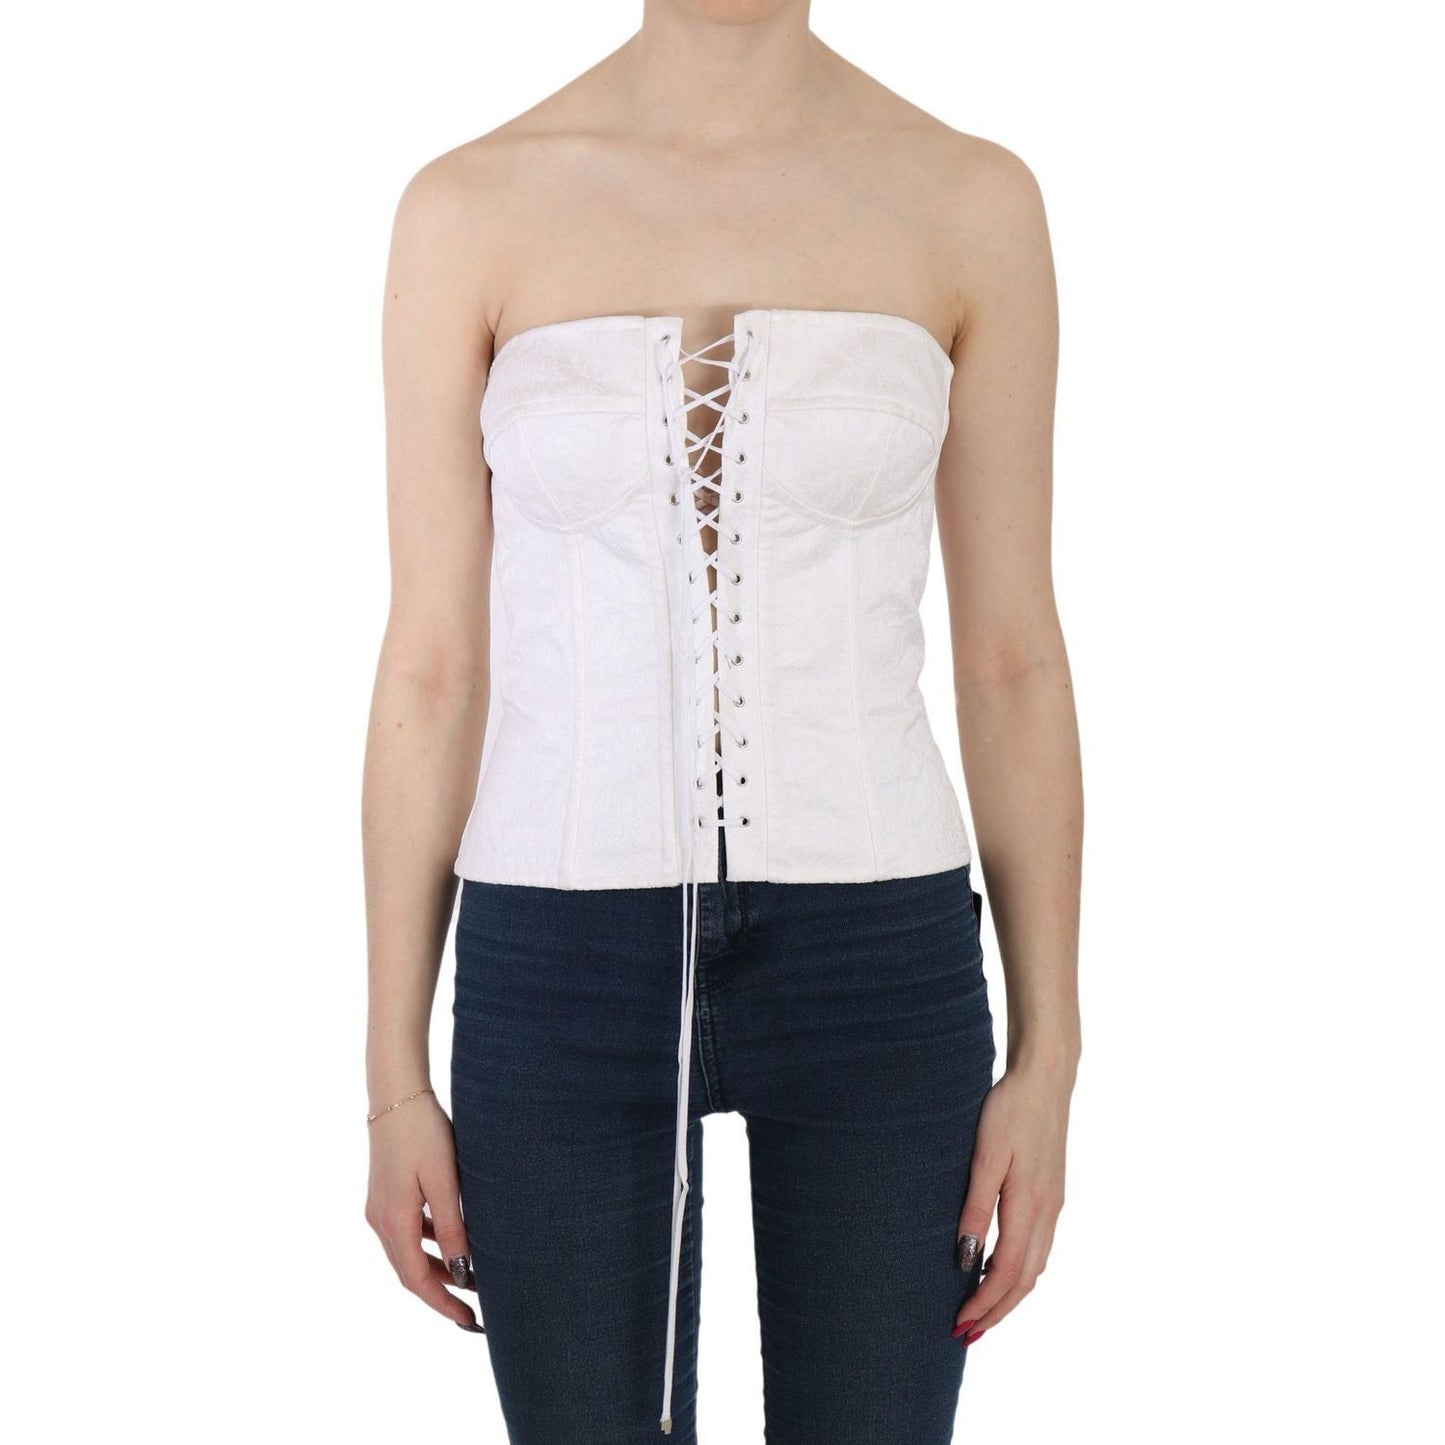 Dolce & Gabbana Elegant White Strapless Corset Top white-palermo-cotton-bustier-top-corset